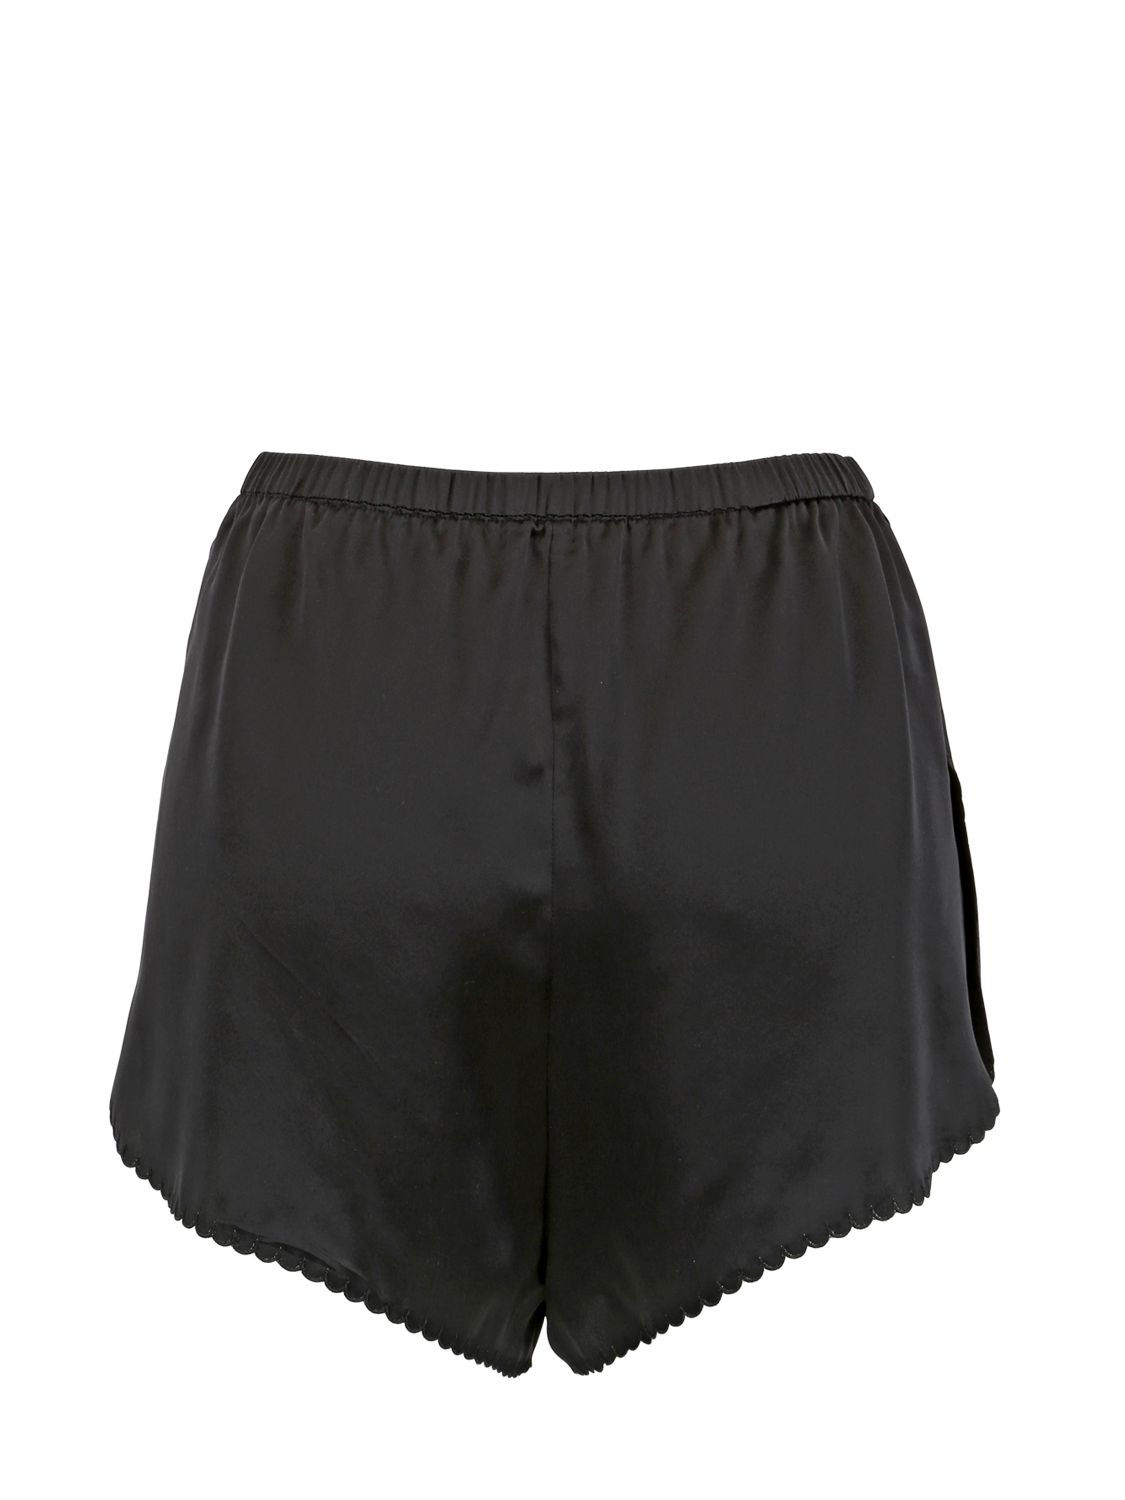 Morgan lane Taffy O'neil Embroidered Silk Shorts in Black | Lyst